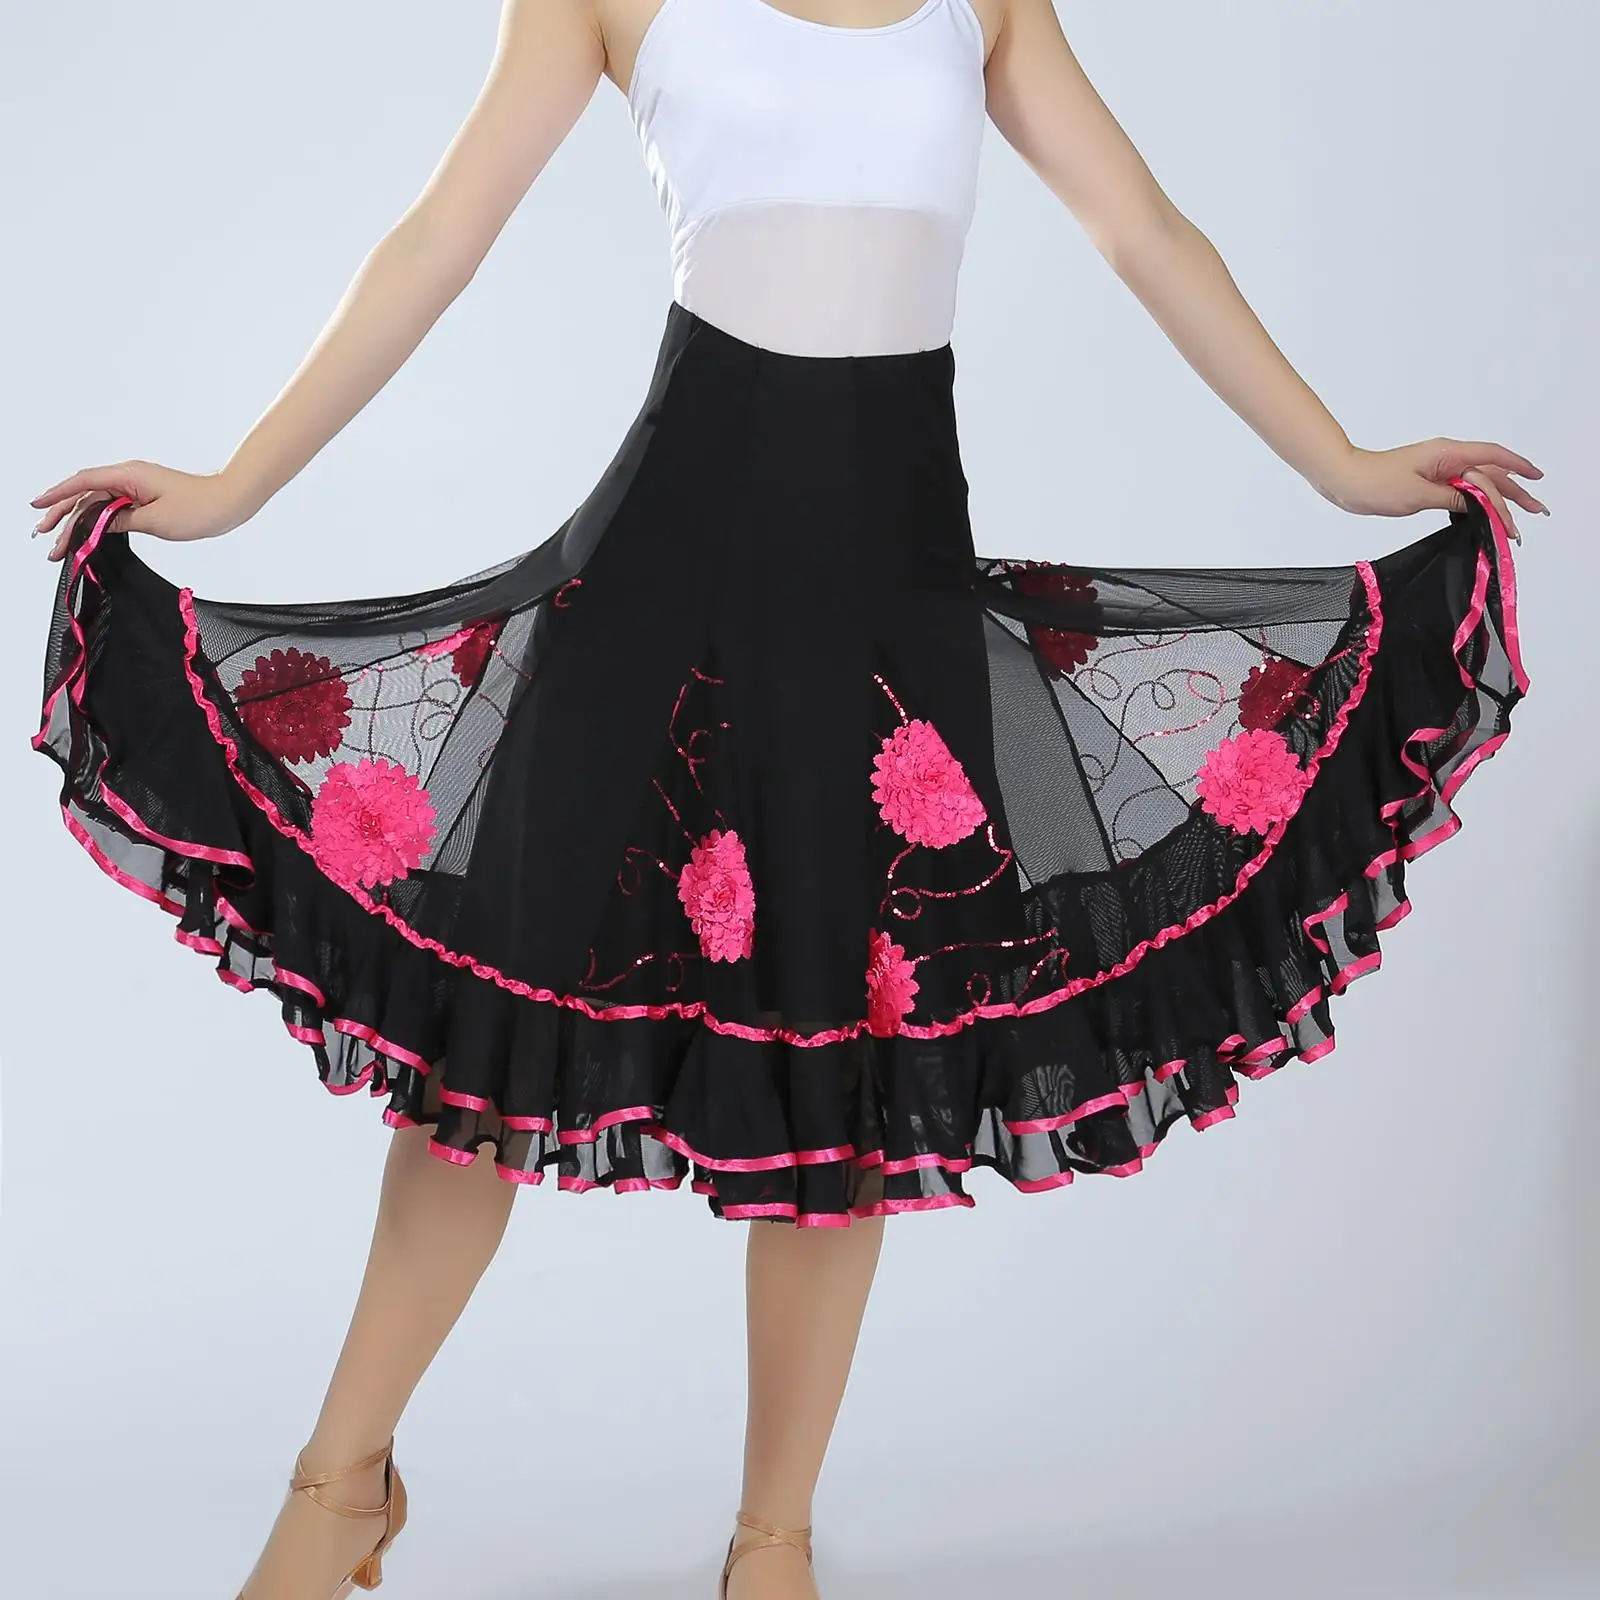 Elegant Ballroom Dance Skirt Dancing Practice Stage Performance Party Dancewear for Latin Flamenco Cha Cha Ladies Women